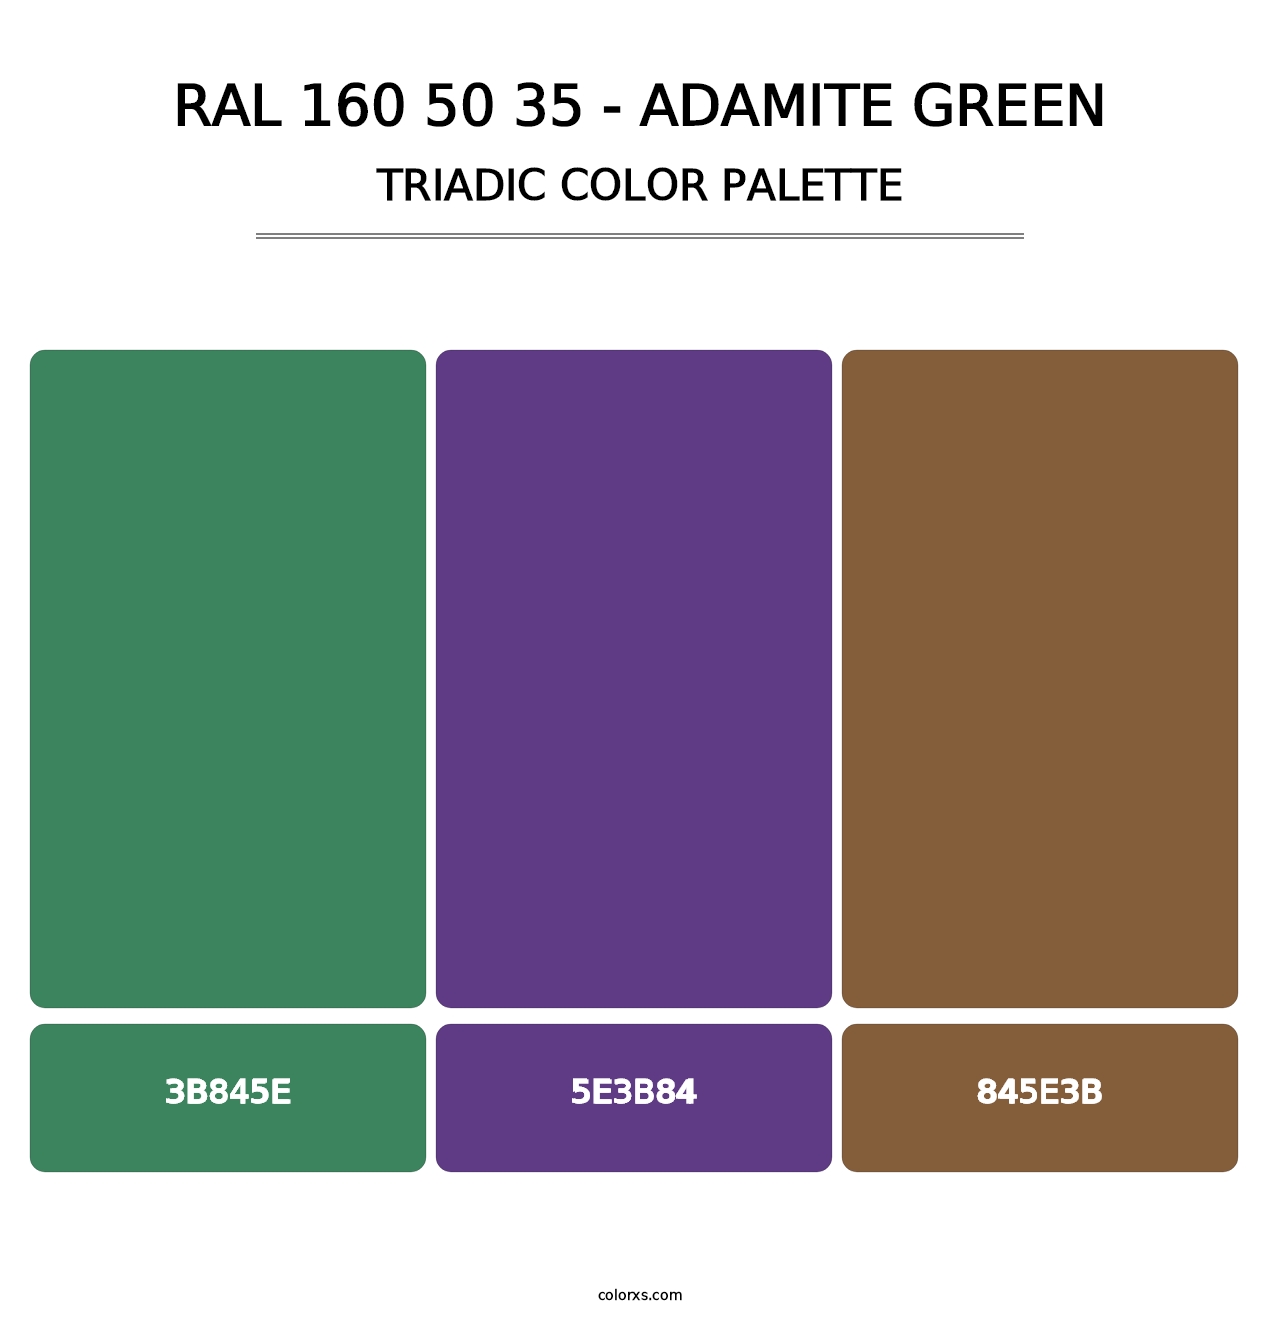 RAL 160 50 35 - Adamite Green - Triadic Color Palette